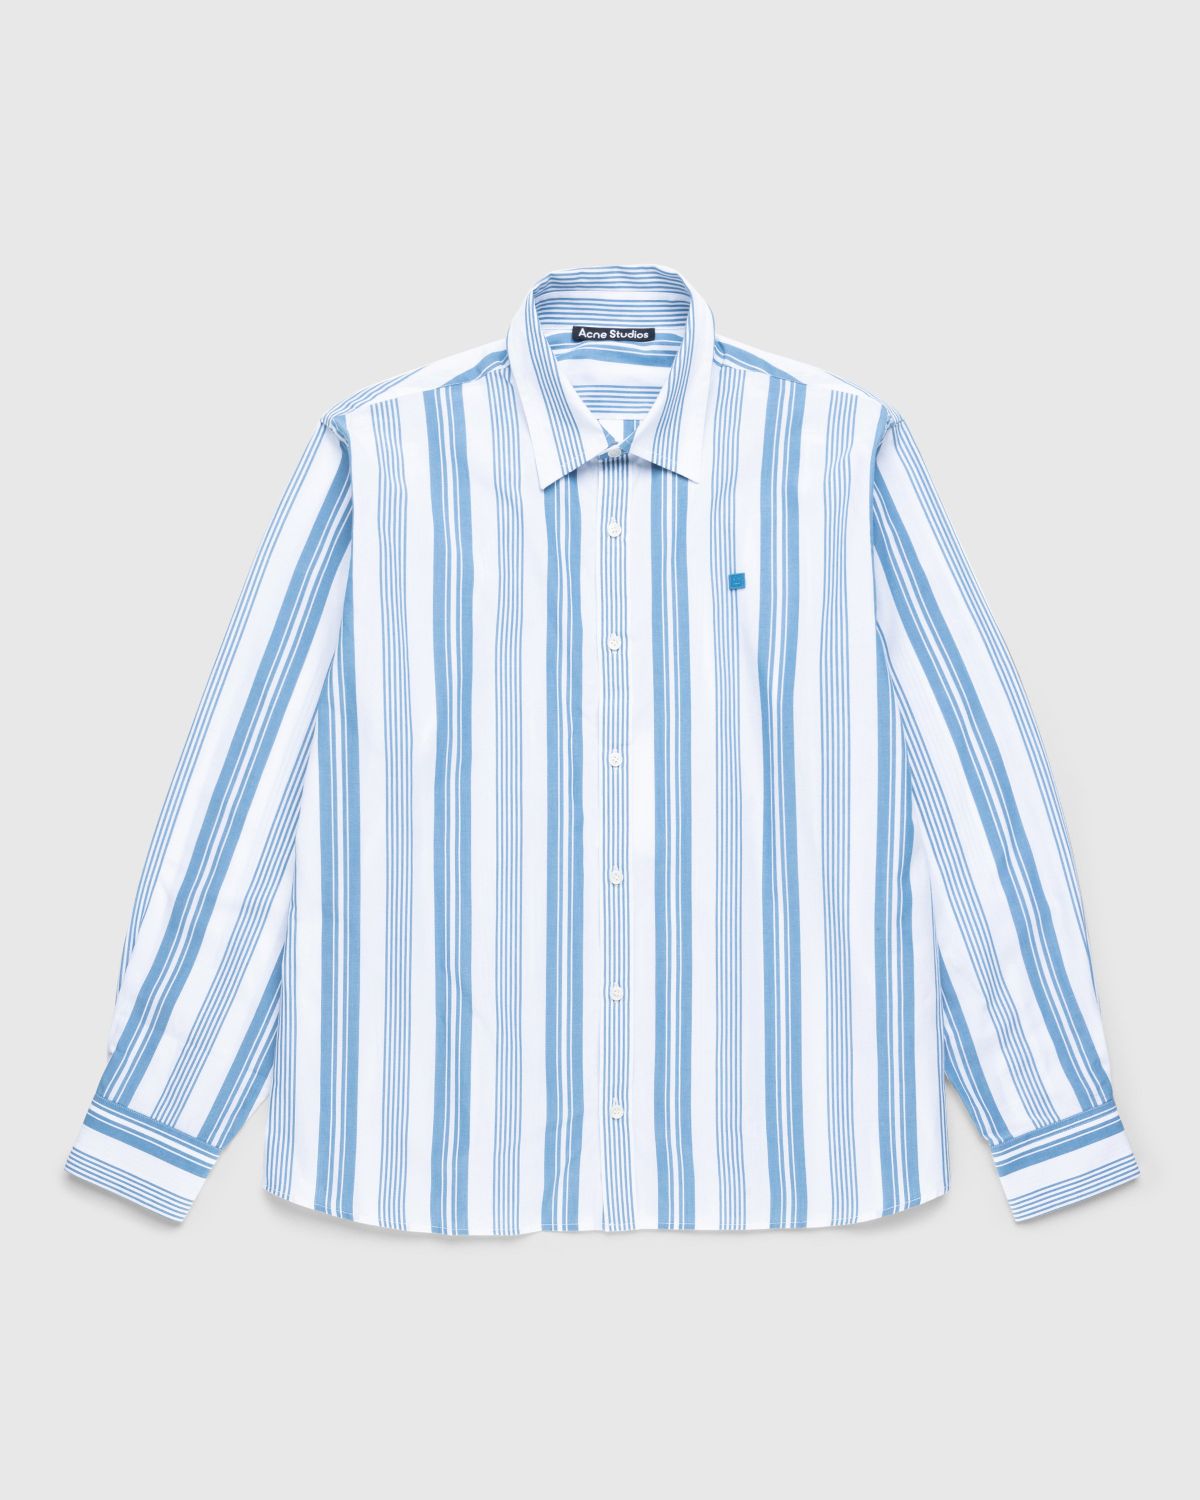 Acne Studios – Stripe Button-Up Shirt White/Steel Blue - Shirts - White - Image 1